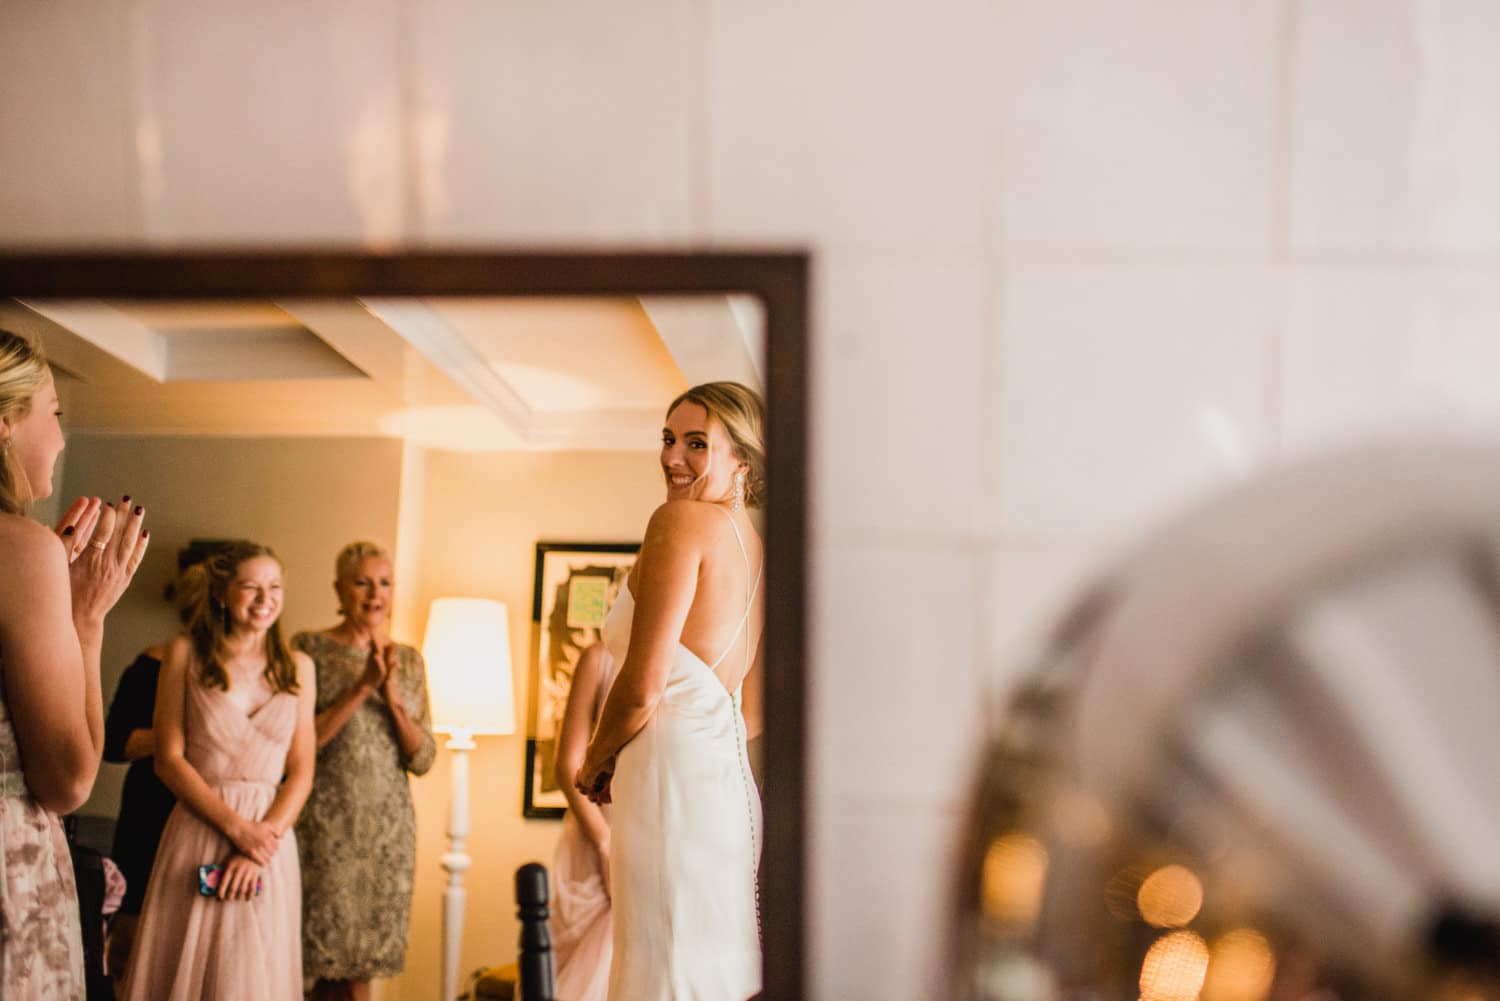 bride in reflection of mirror